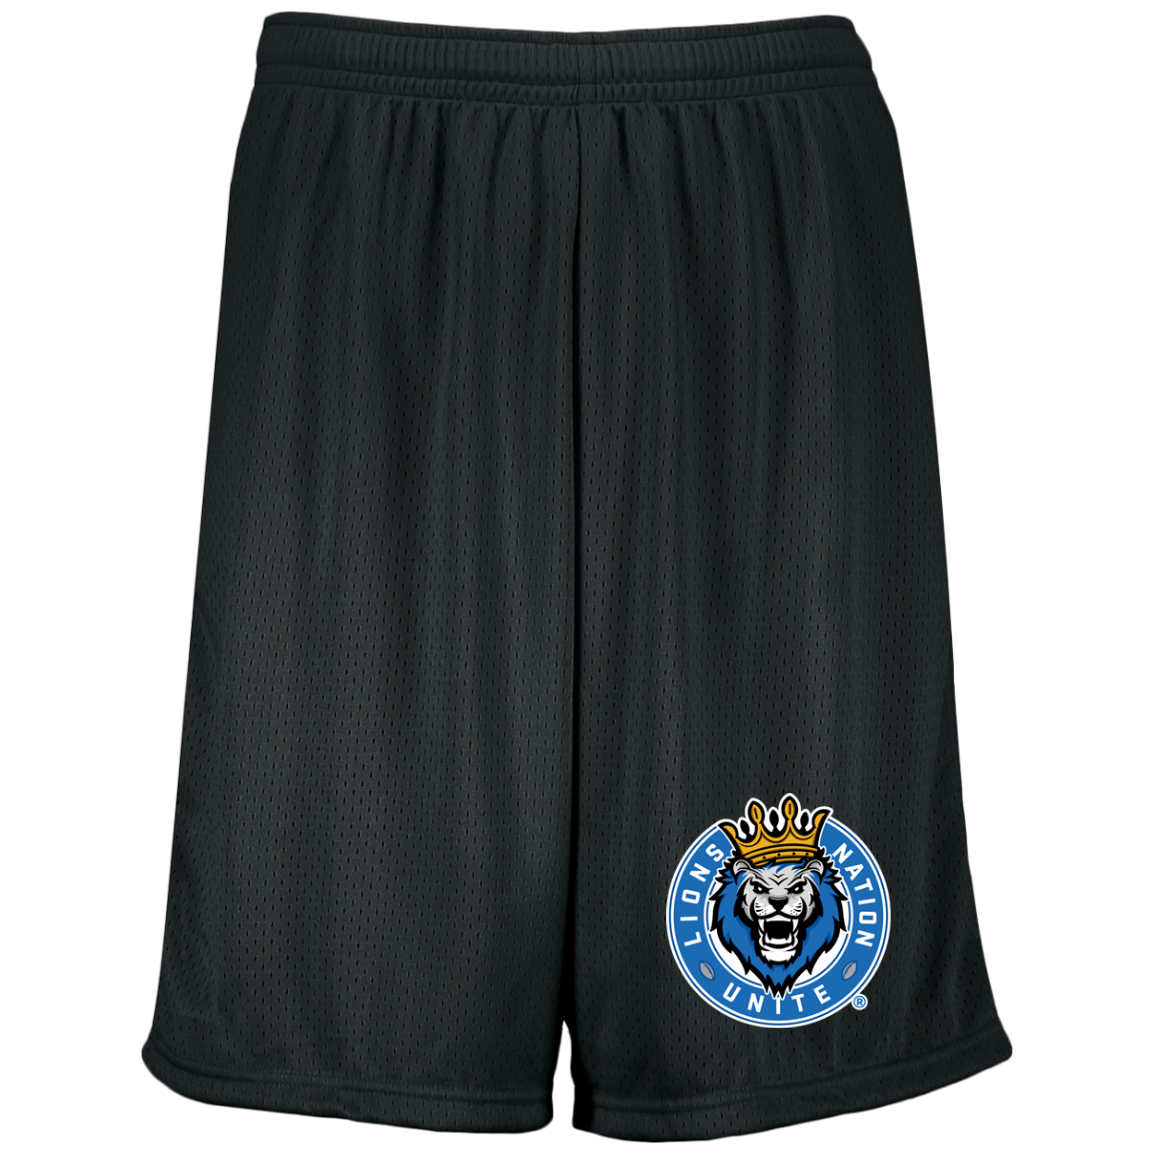 Lions Nation Unite® Men's 9-inch Inseam Mesh Shorts